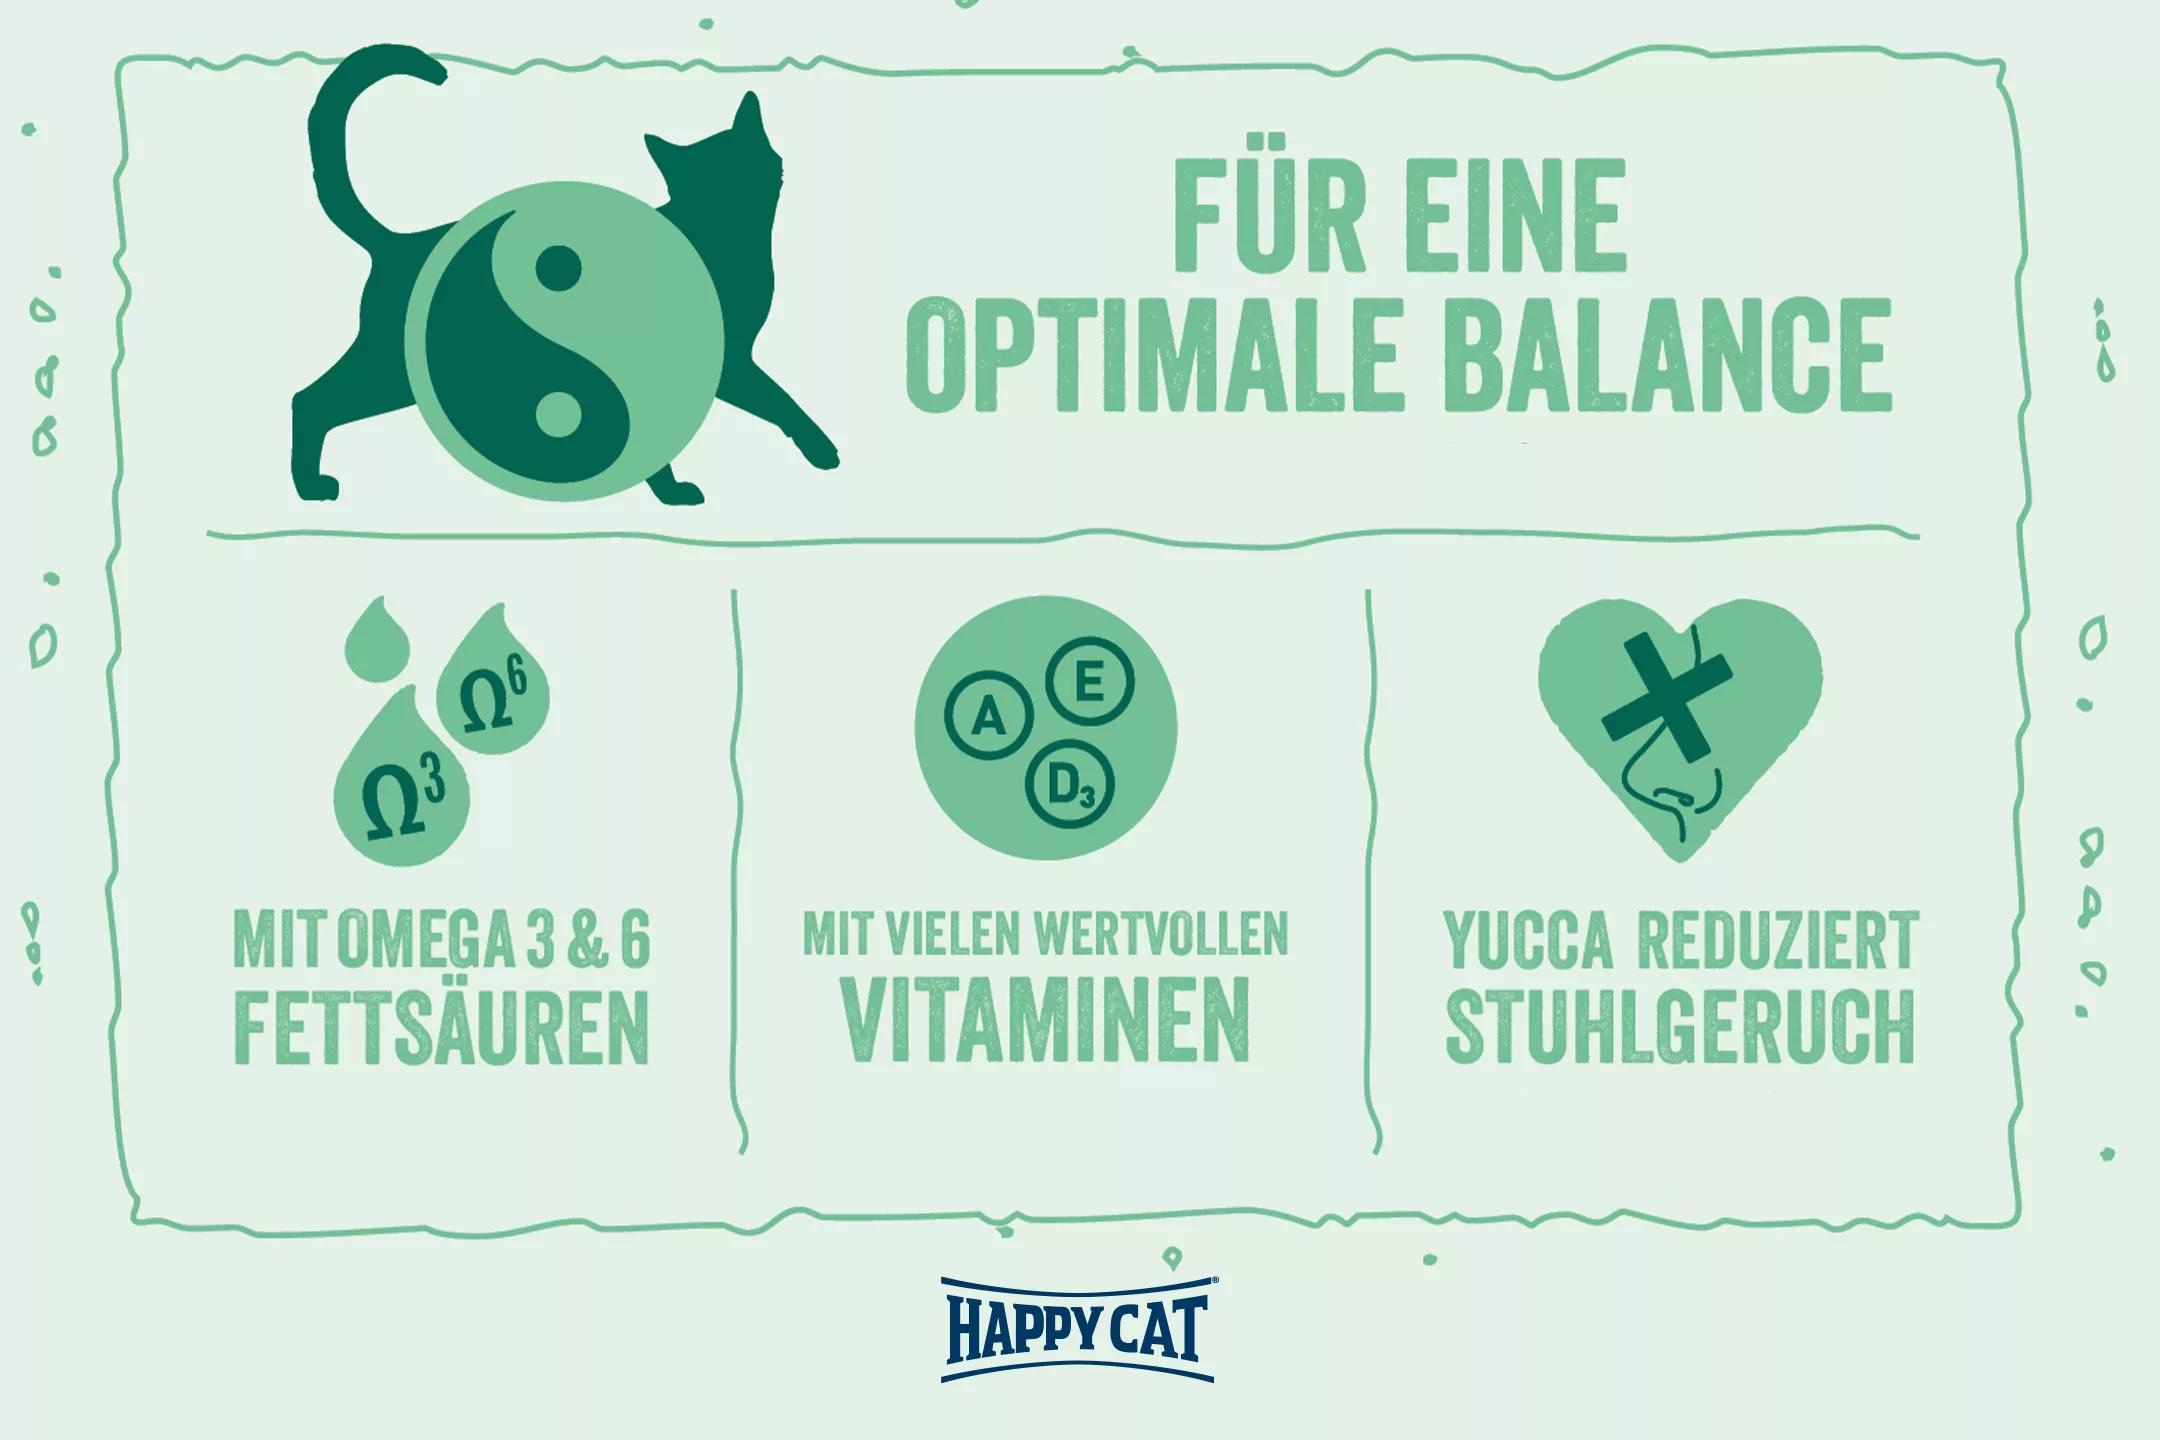 Happy Cat Minkas Perfect Mix Geflügel, Fisch & Lamm